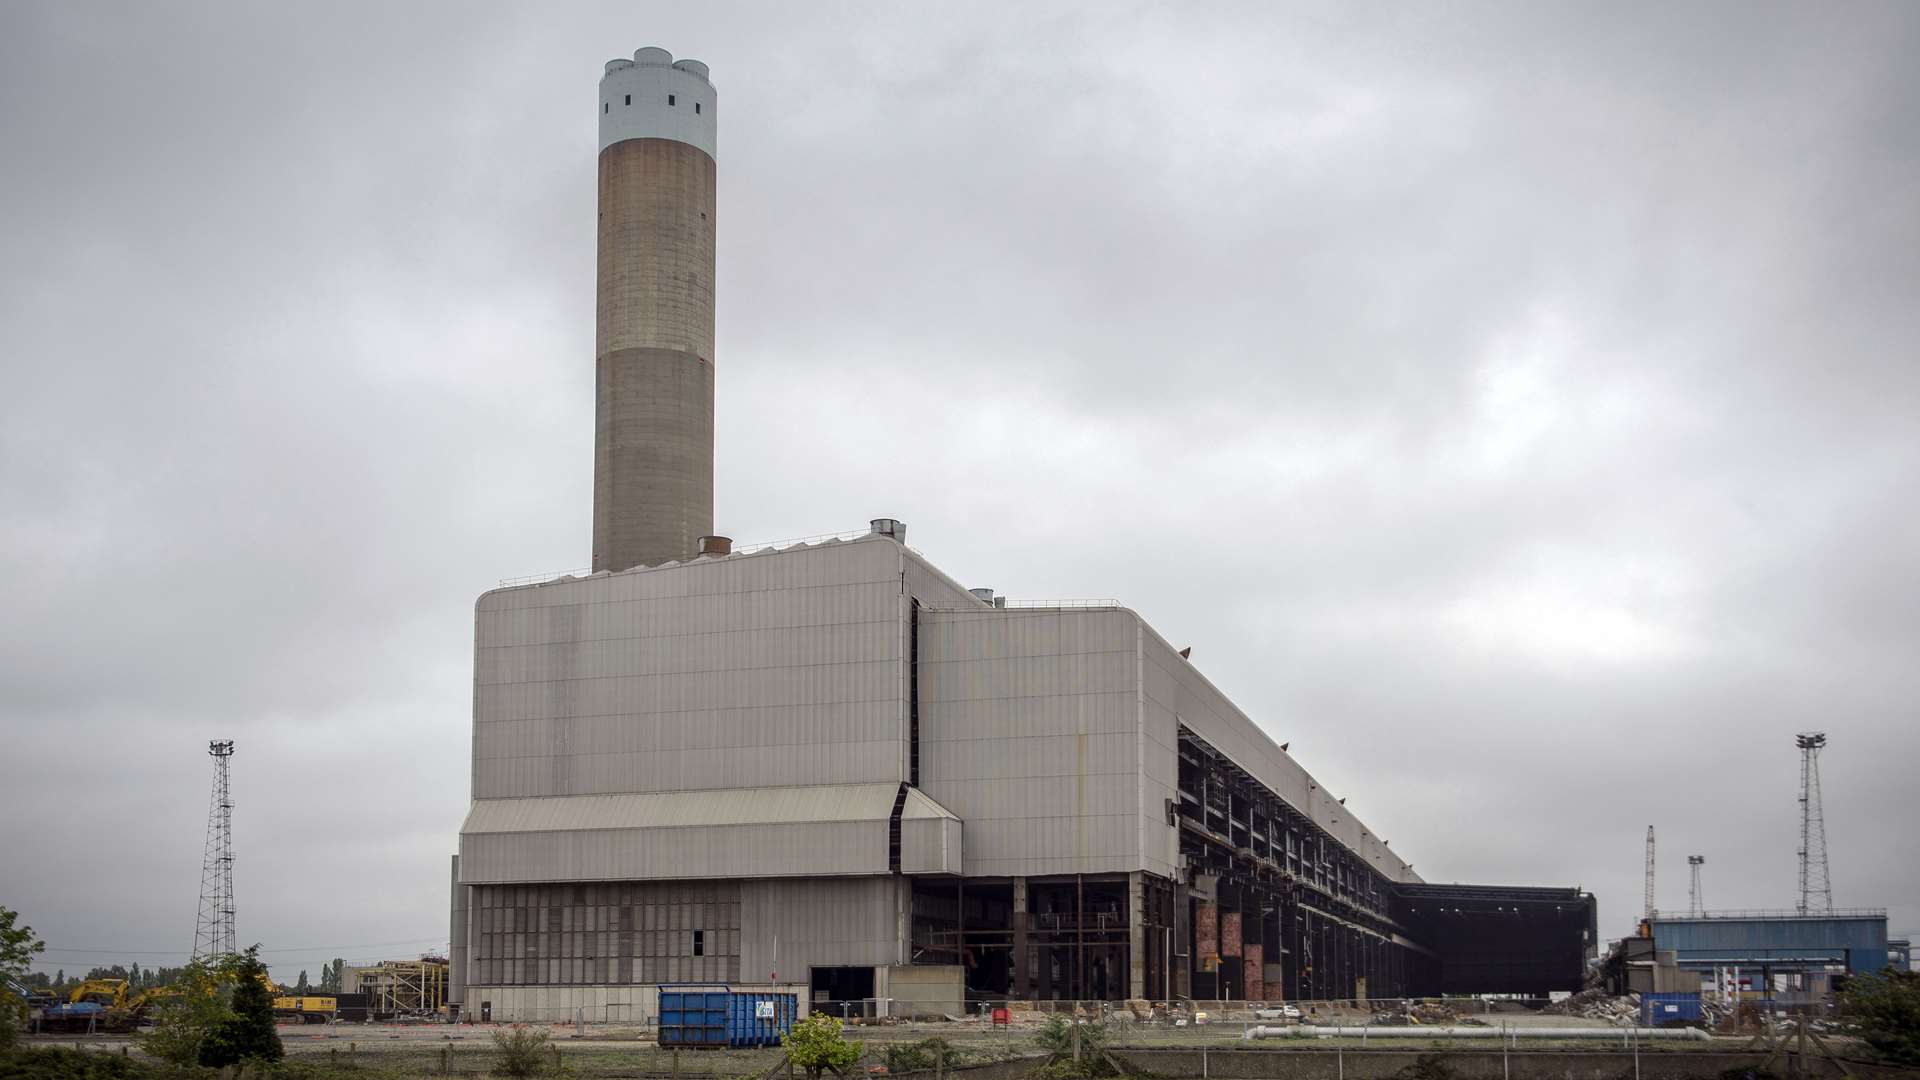 Grain Power Station pictured before demolition begins